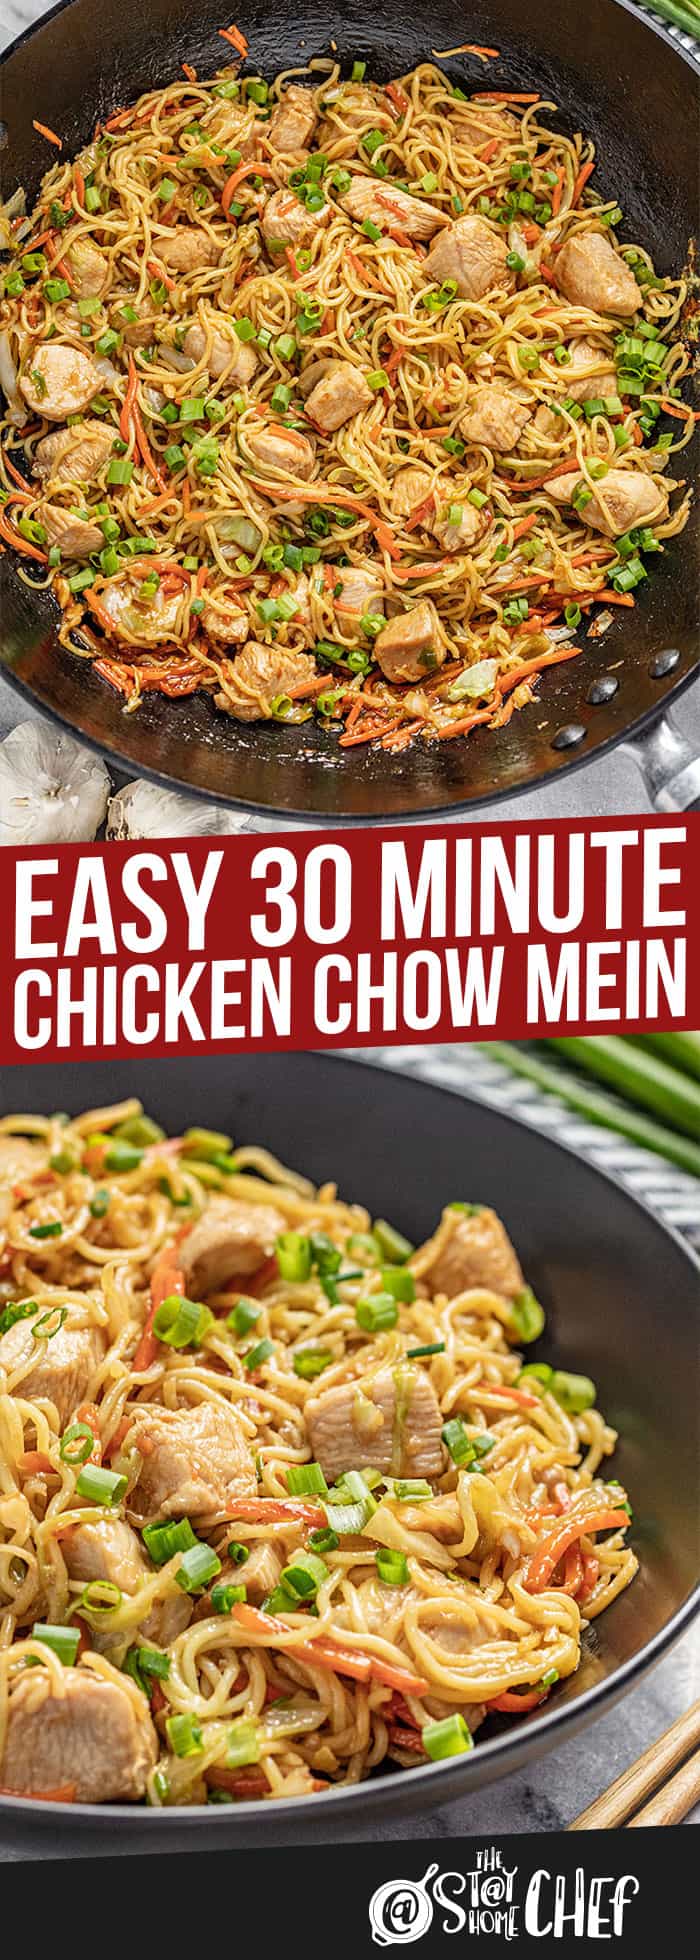 Easy 30 Minute Chicken Chow Mein